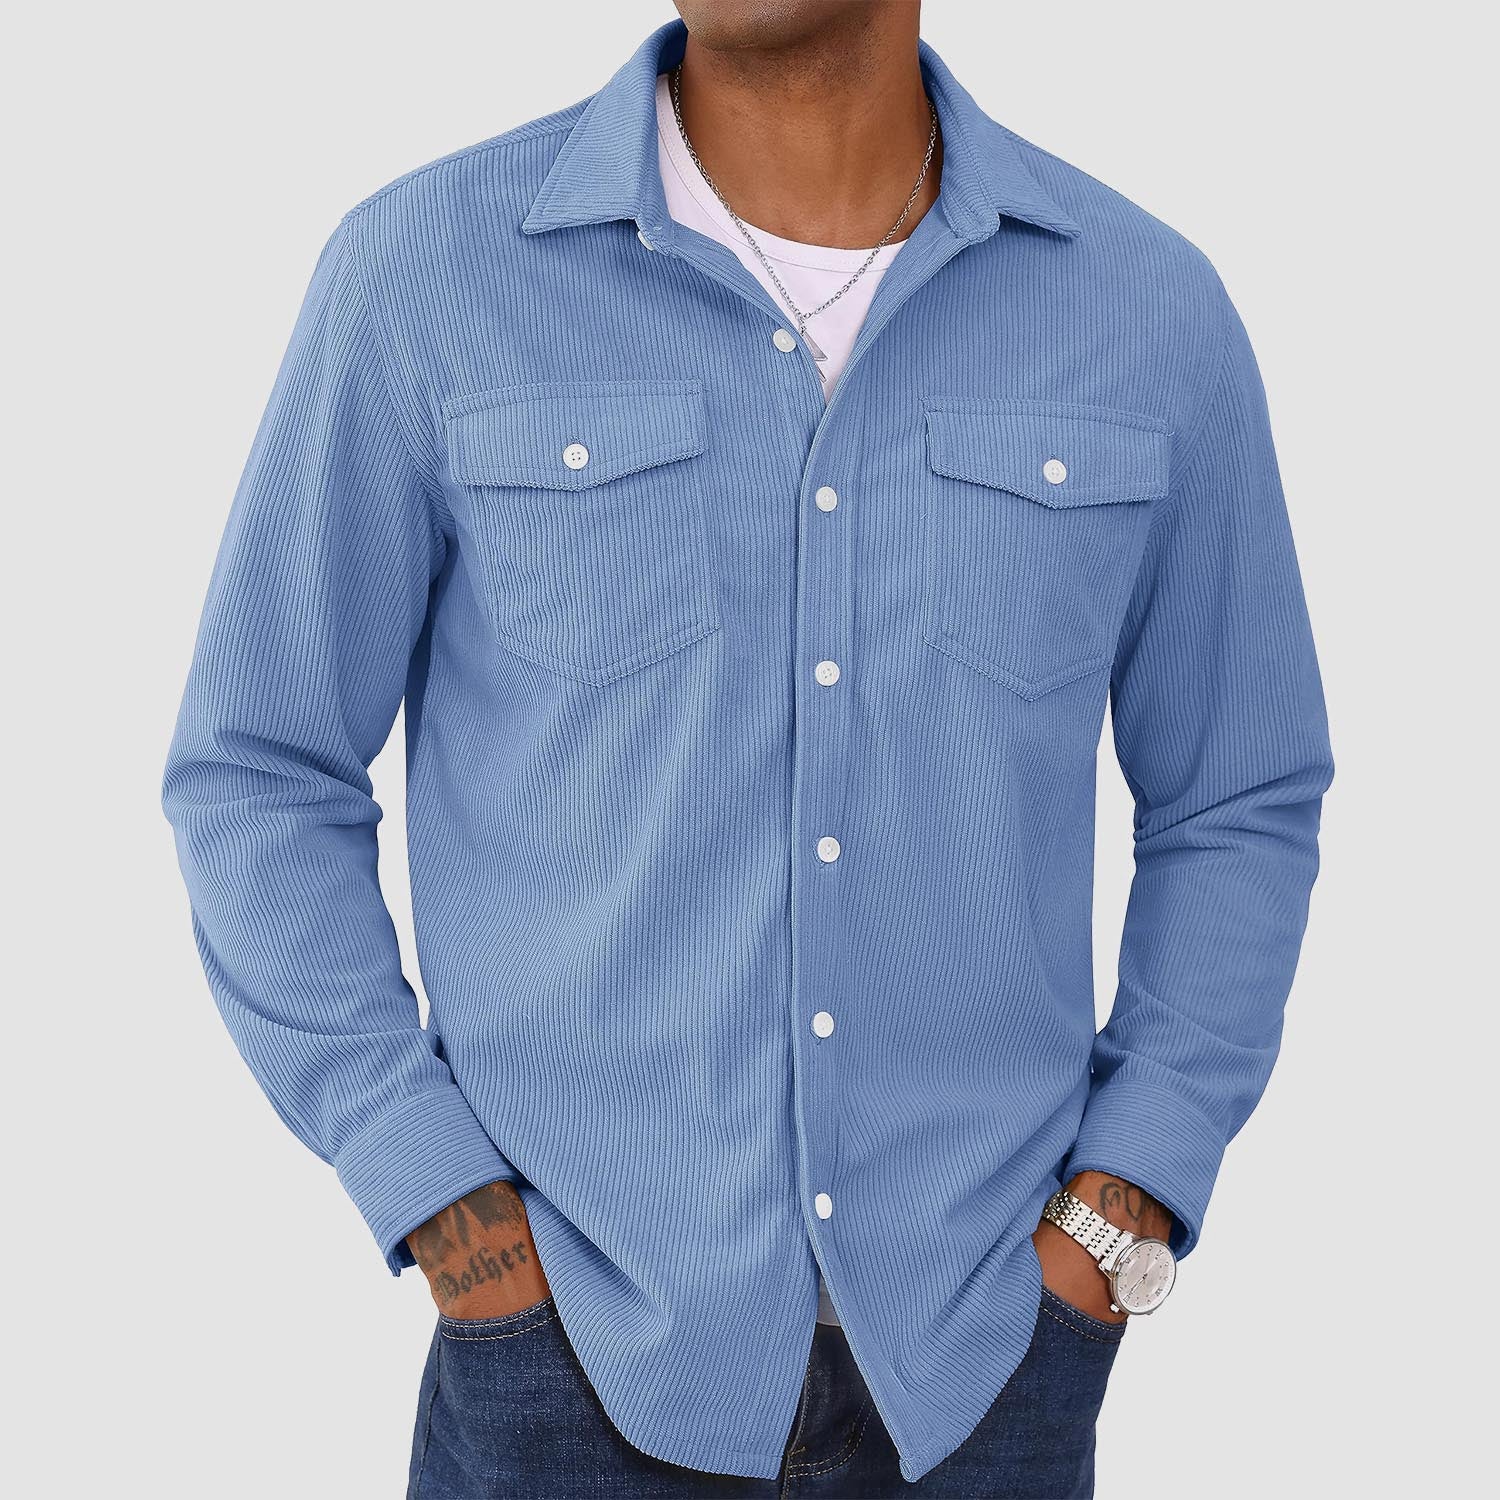 Alimens & Gentle Mens Long Sleeve Hiking Shirts Quick Dry UPF 50+ UV Sun Protection Fishing Shirt Cooling Button Down Shirt